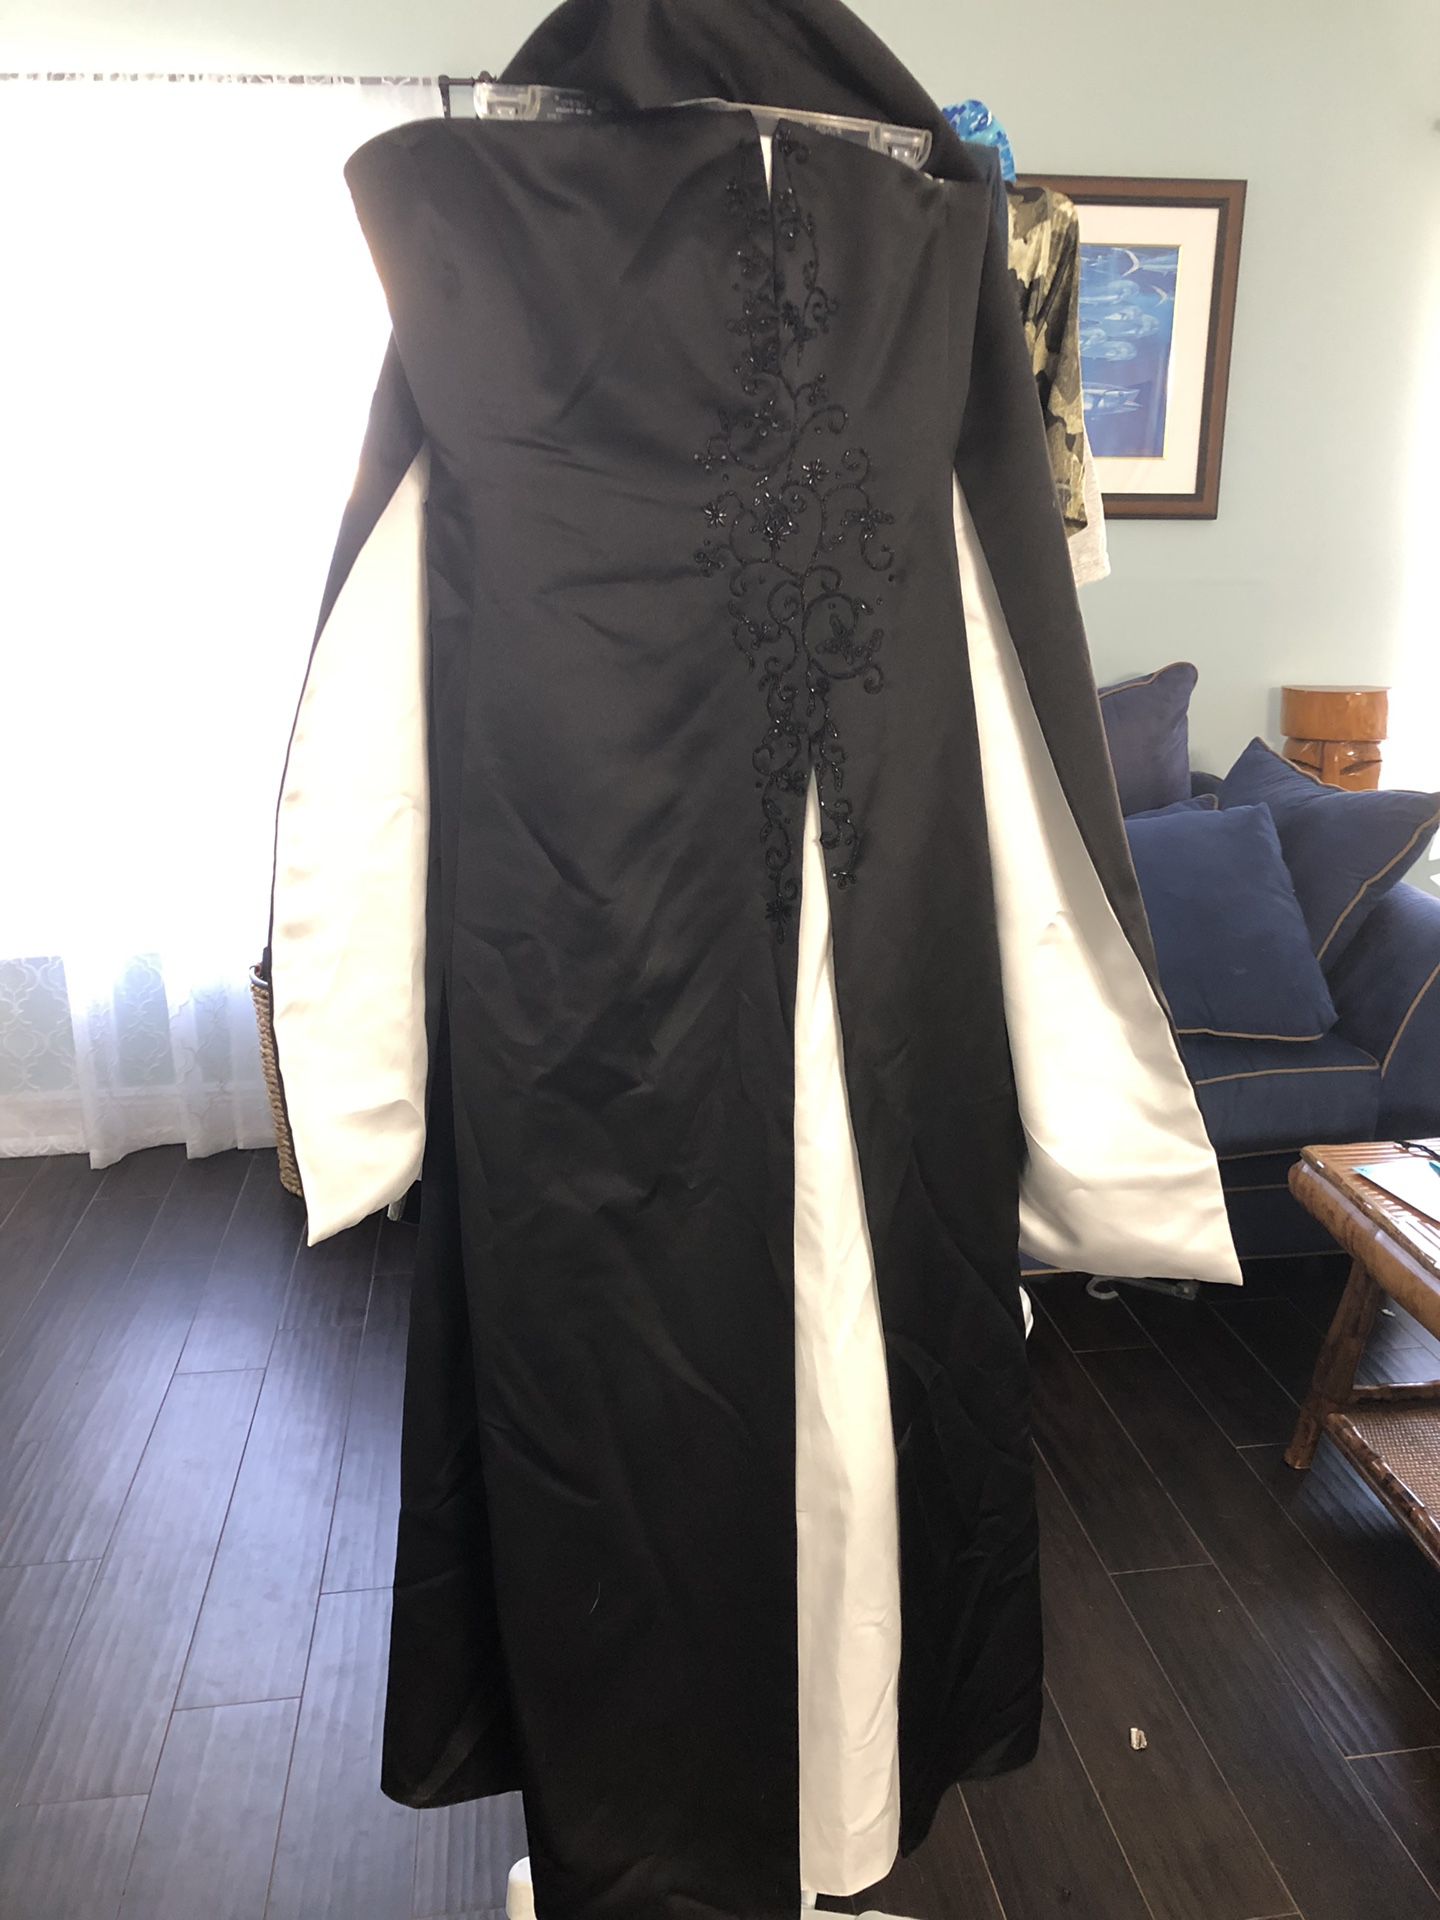 Formal Dress black and white sleeveless